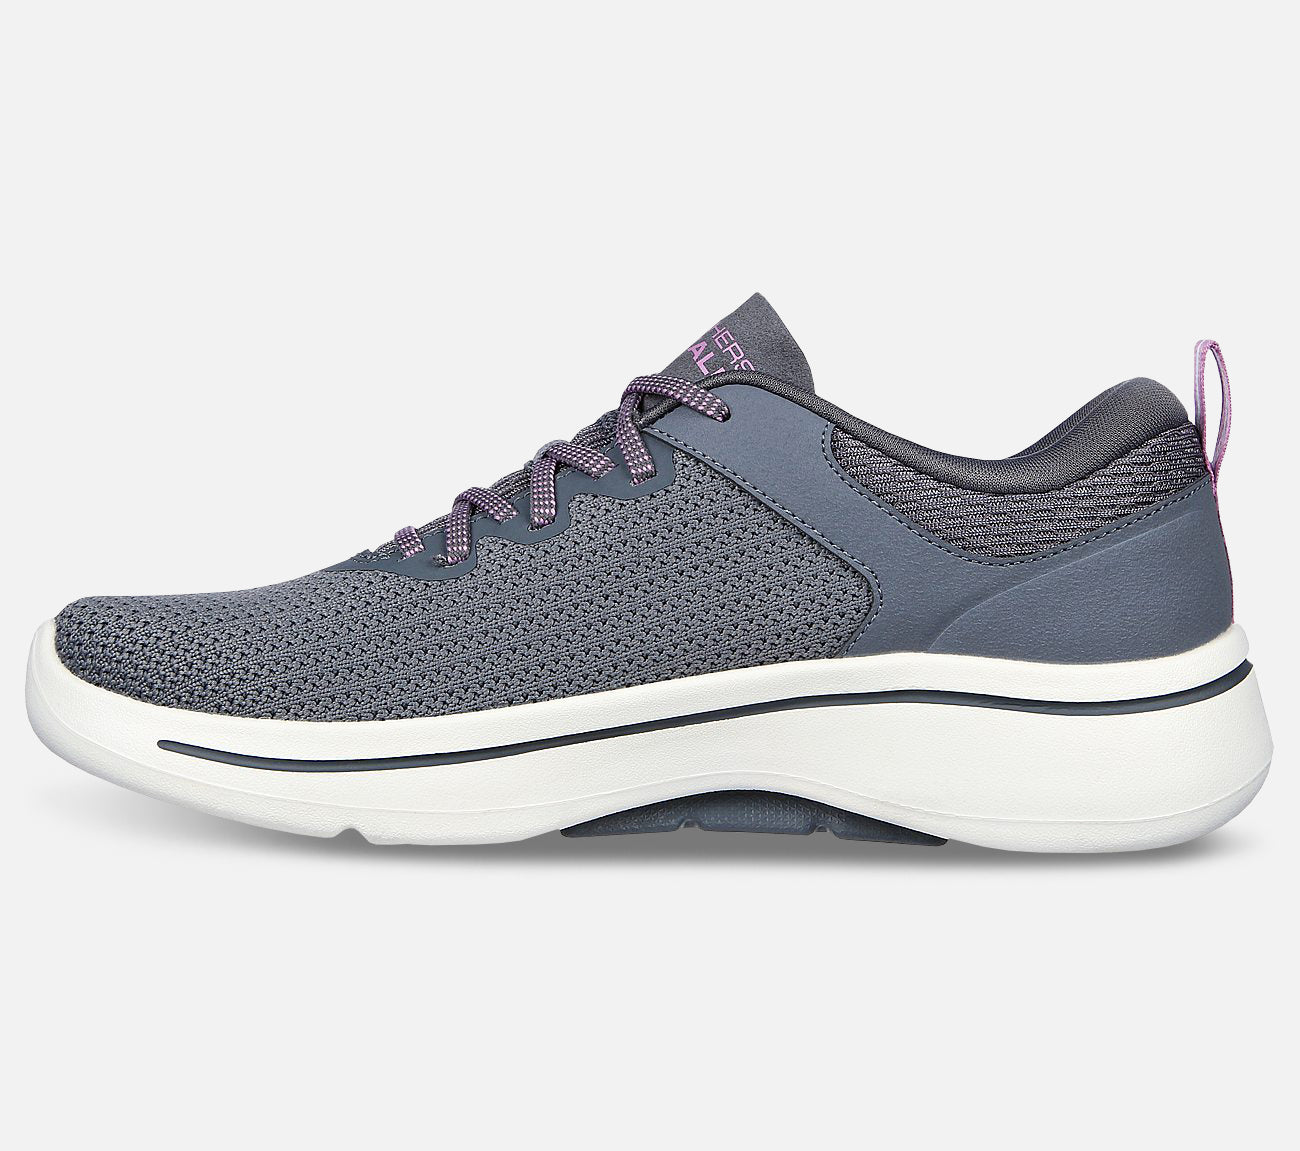 GO WALK Arch Fit - Vibrant Look Shoe Skechers